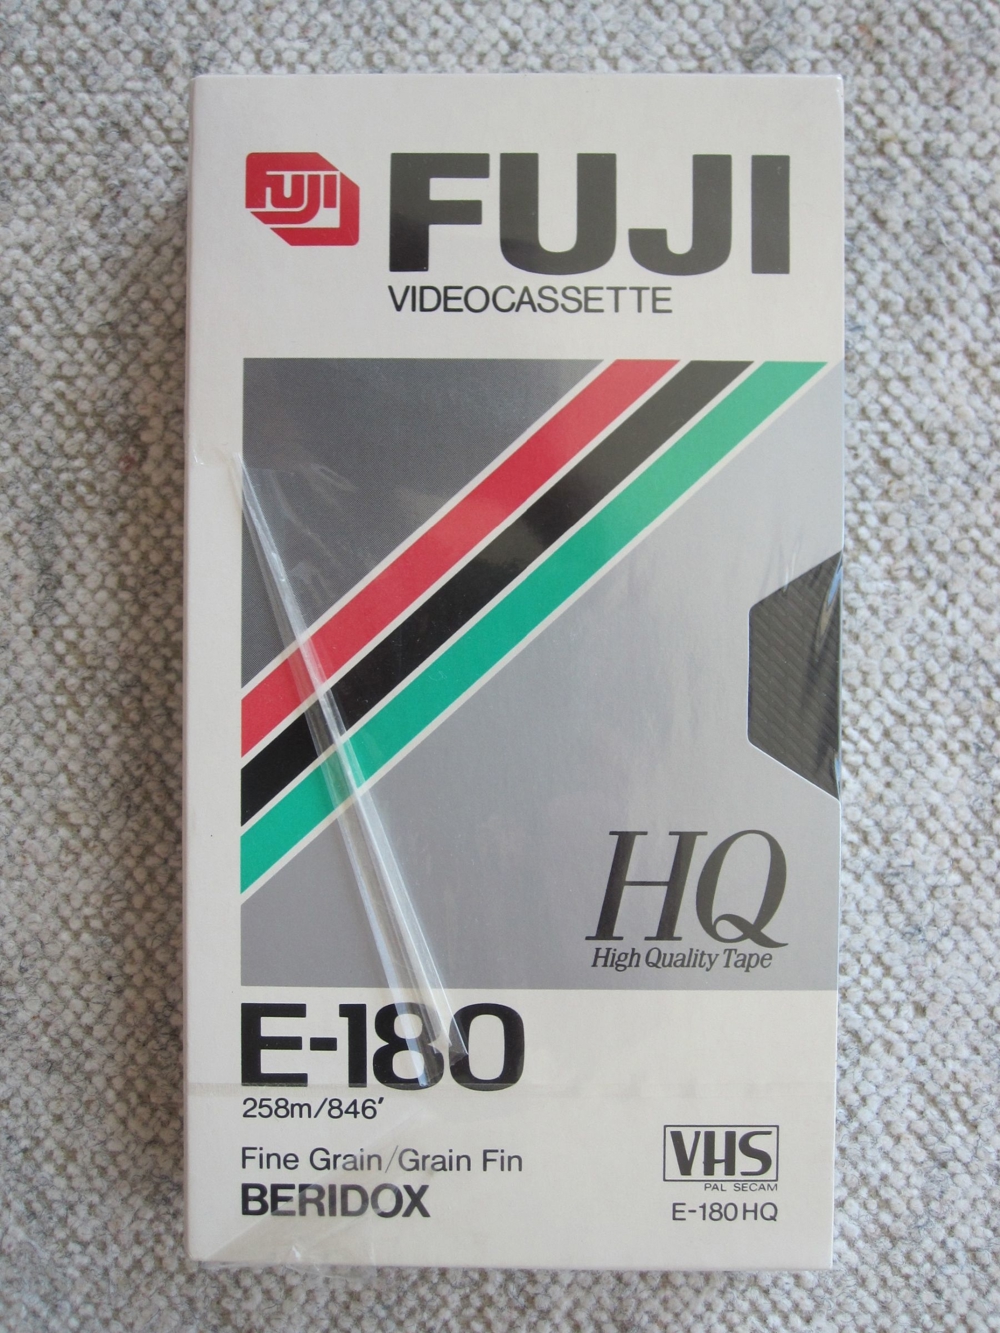 VHS- Videocassette, neu in Originalverpackung